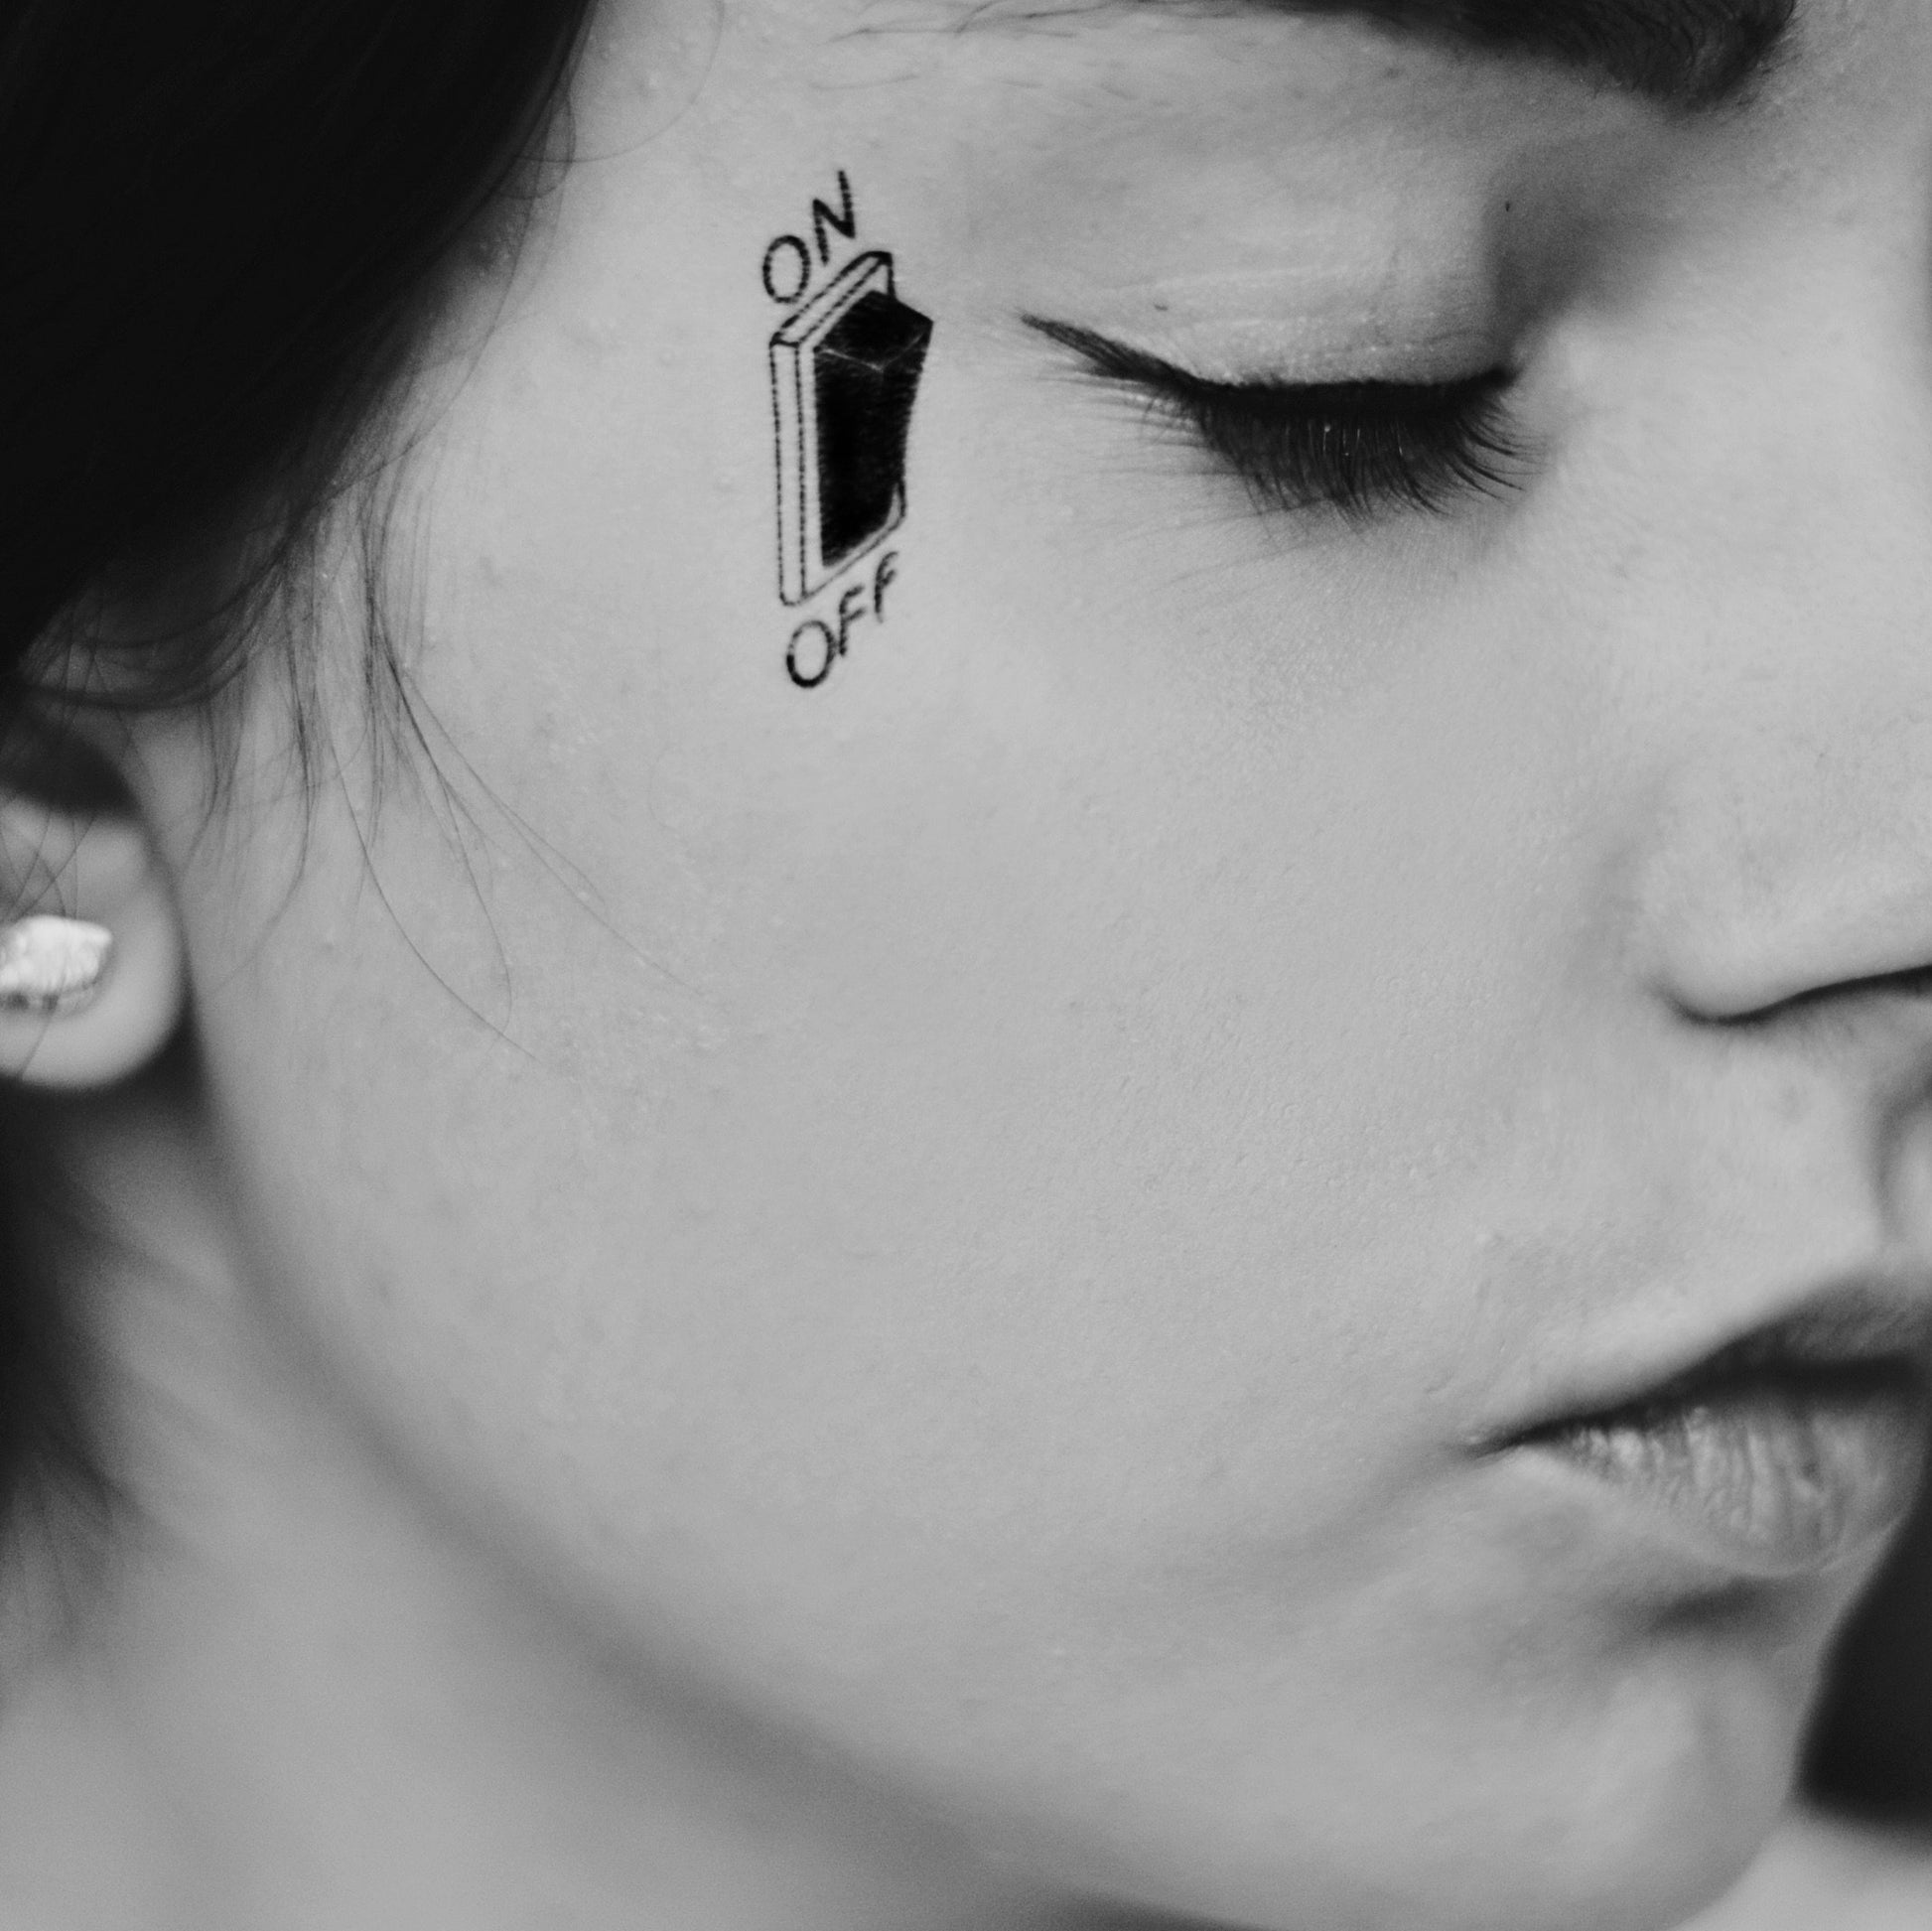 fake small power switch girl face minimalist temporary tattoo sticker design idea on face